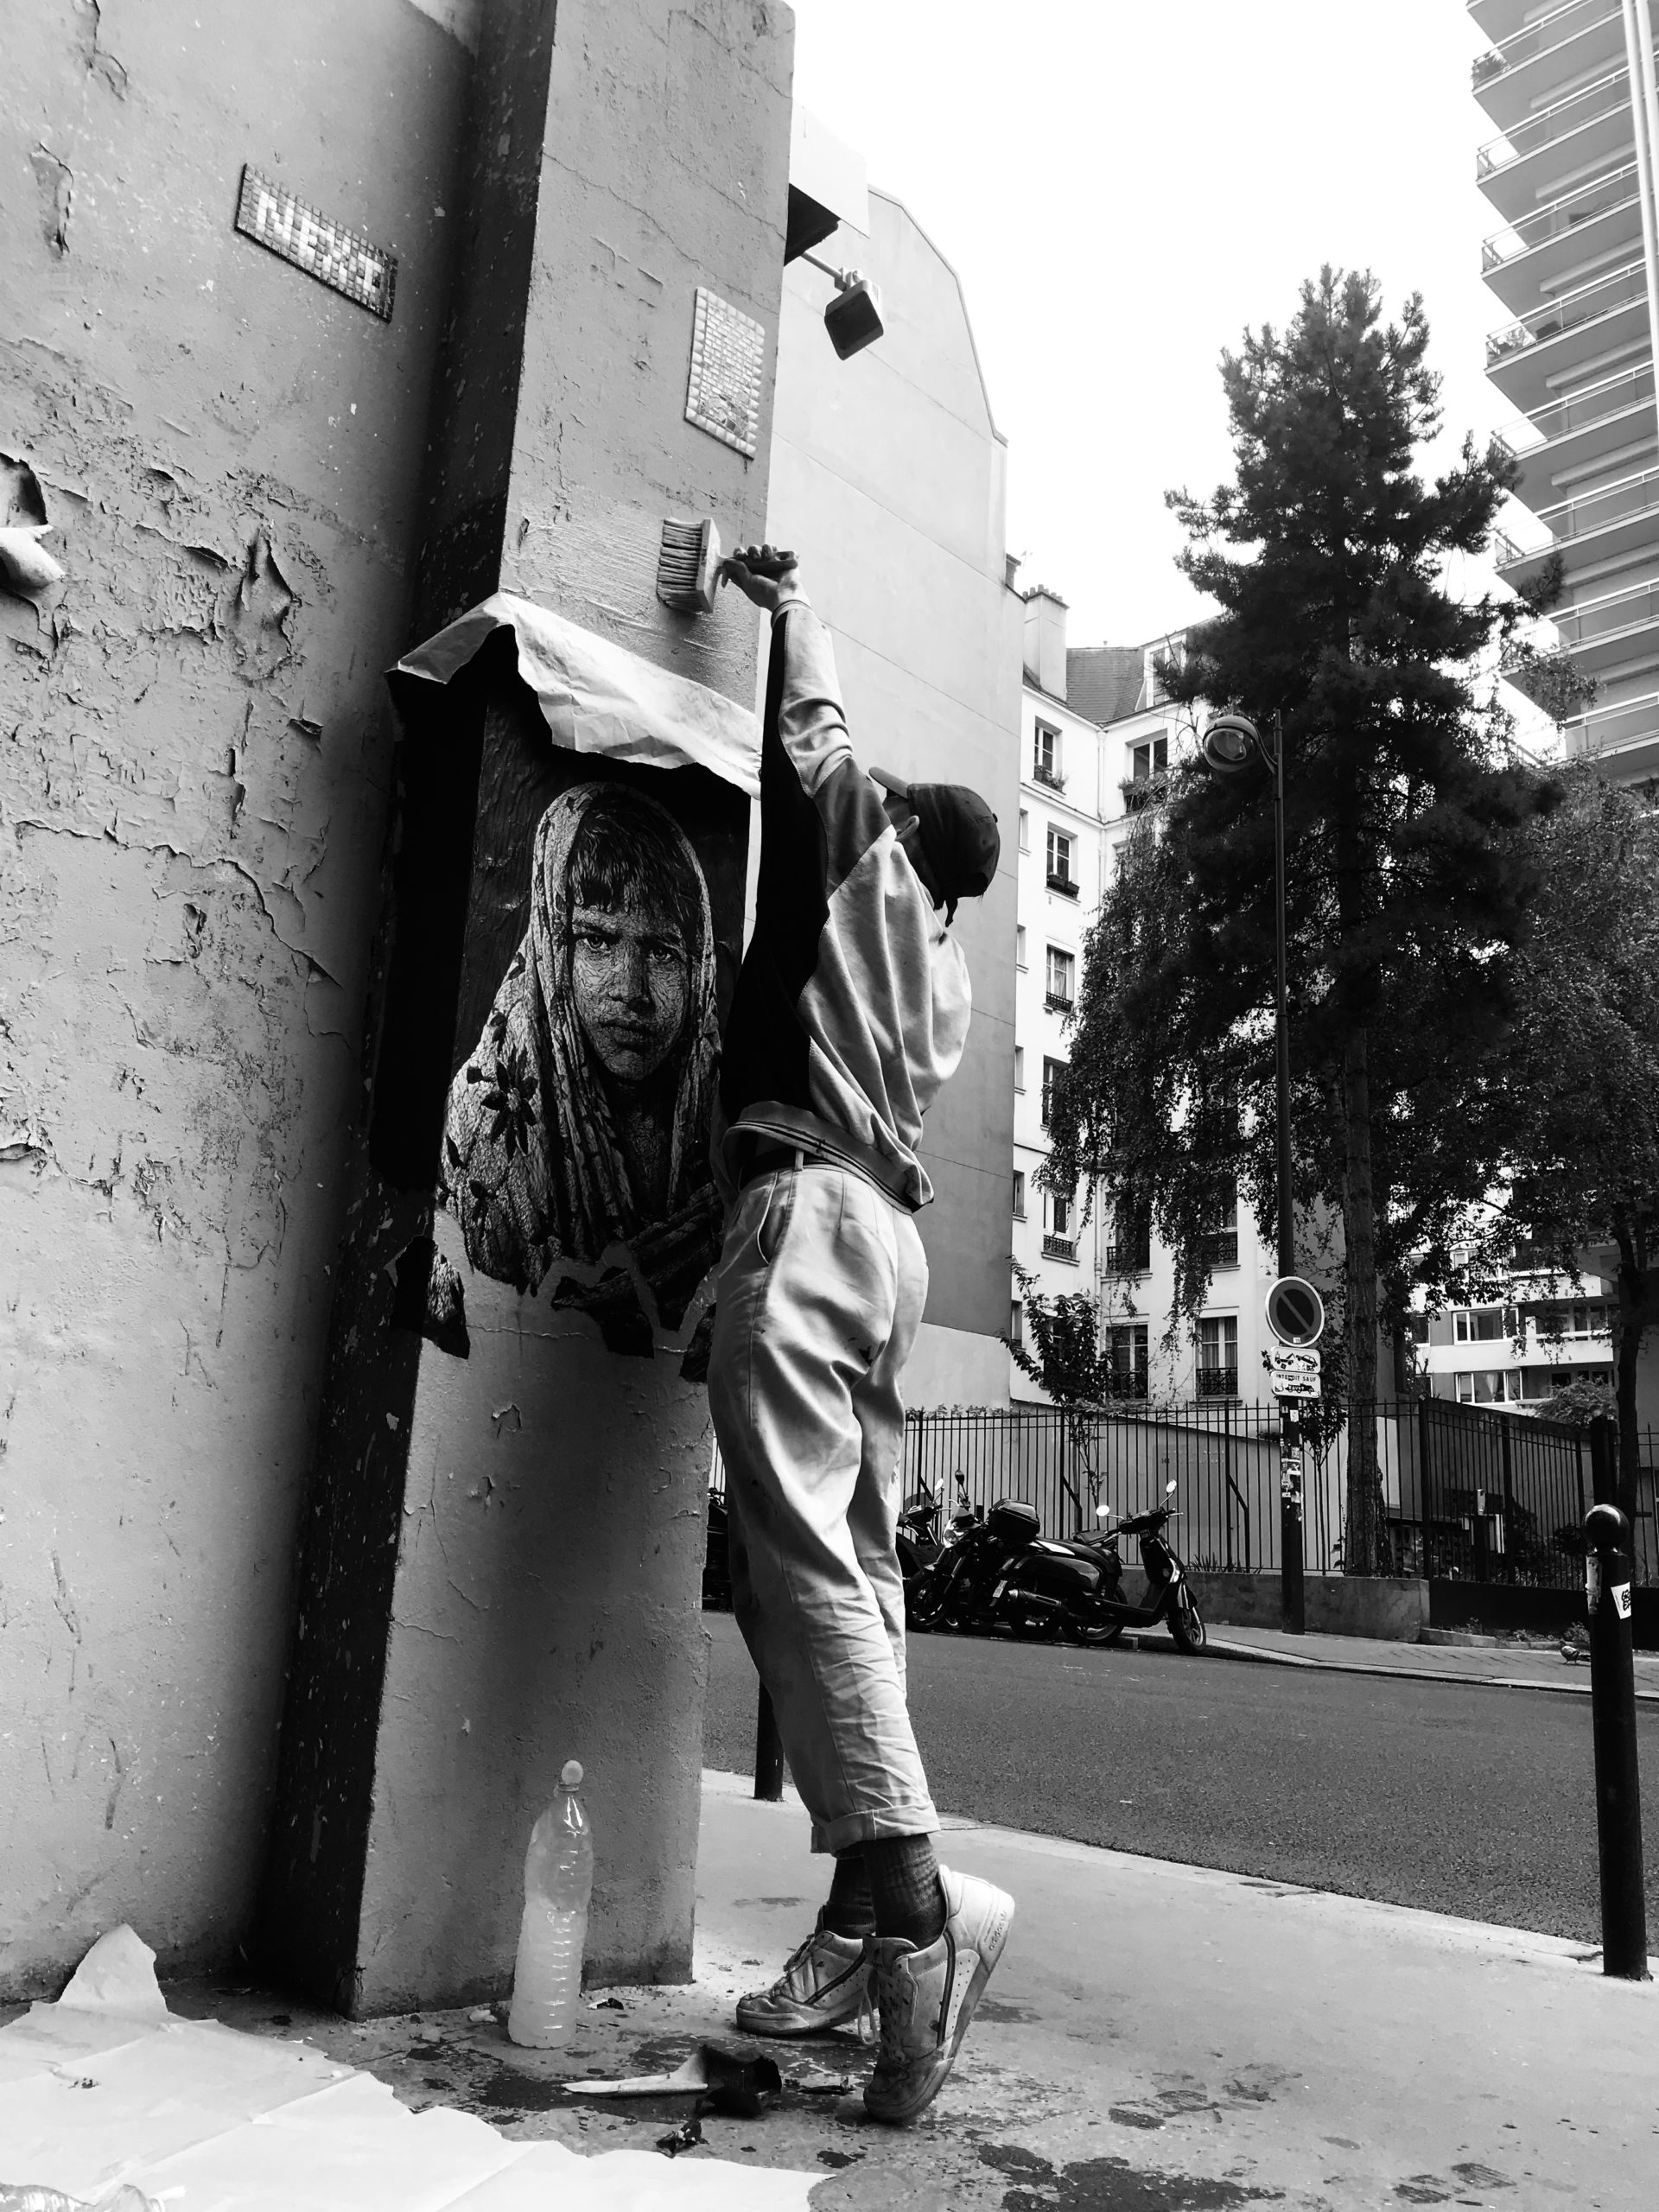 In the streets of Paris, NASTI